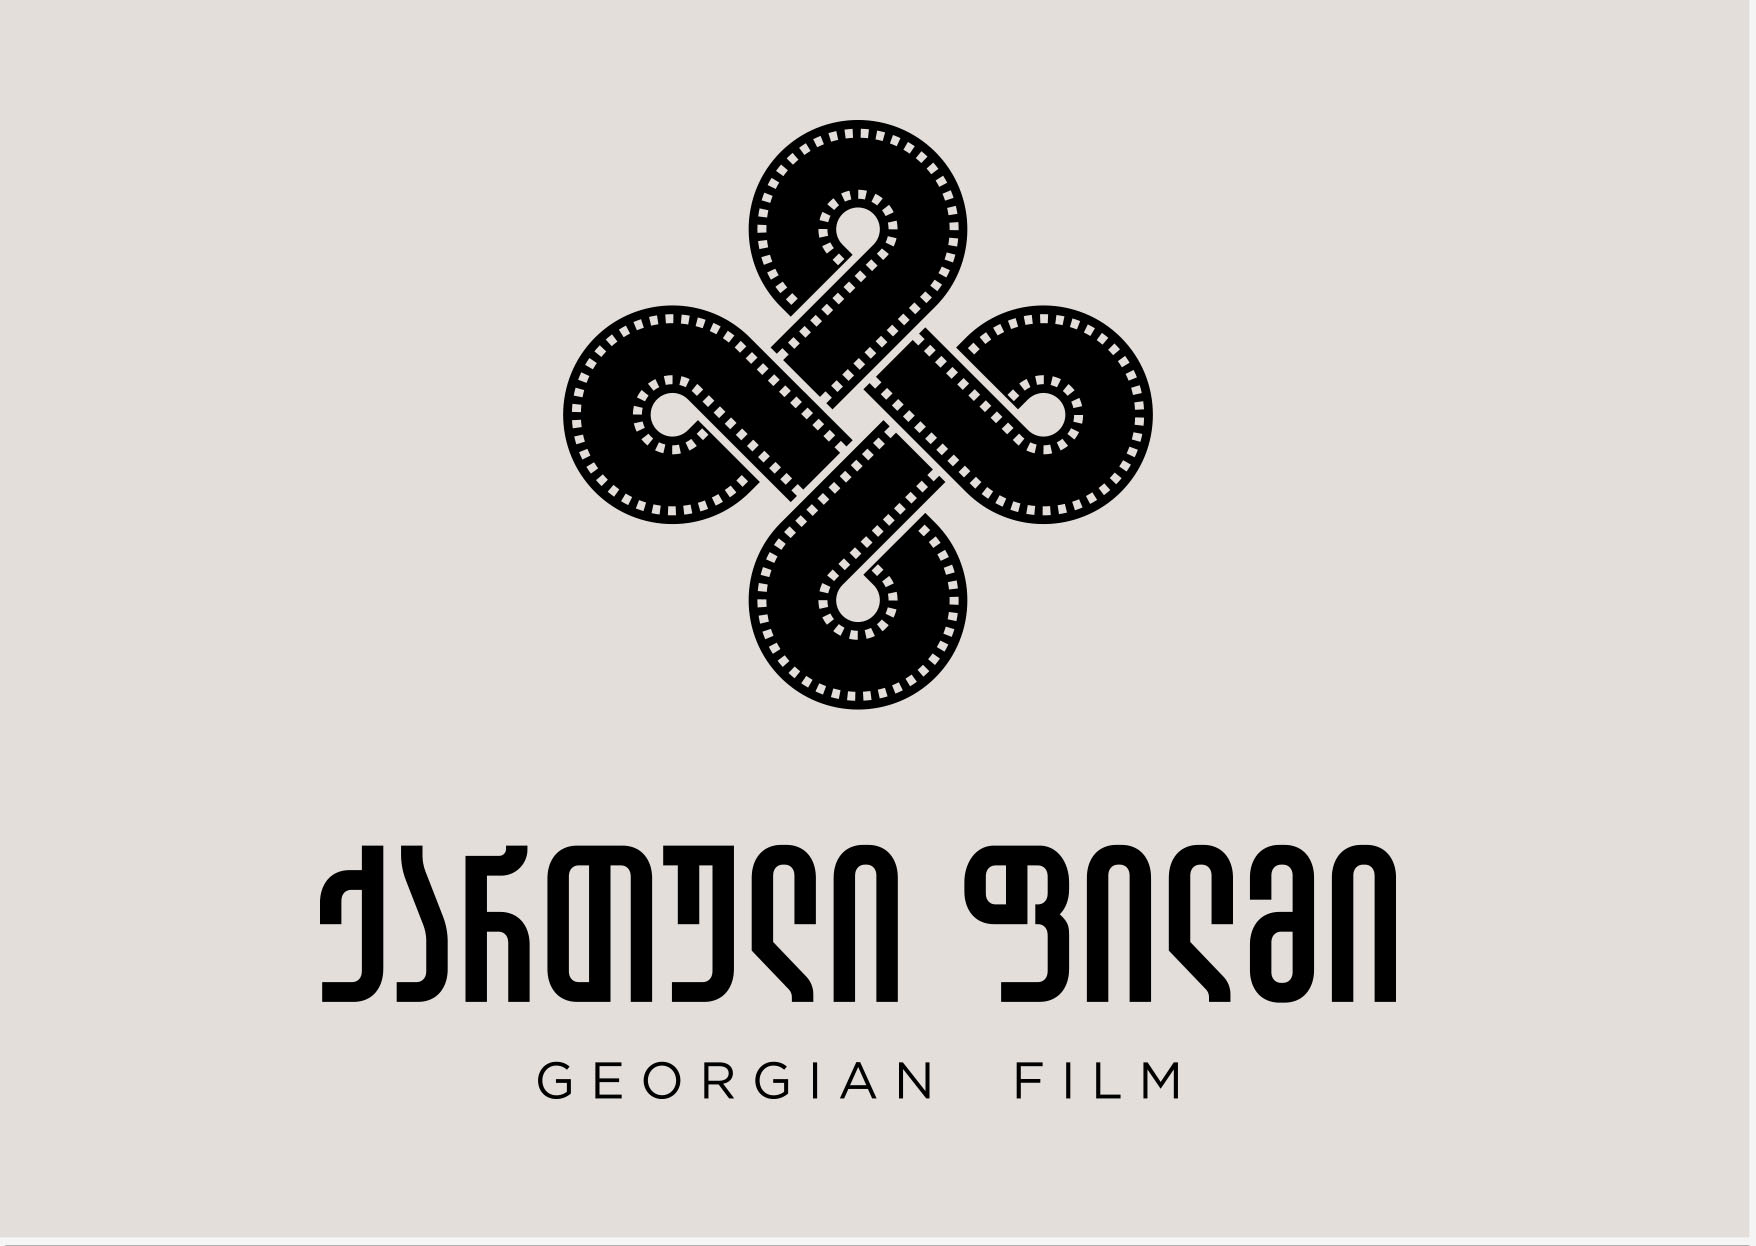 Georgian film